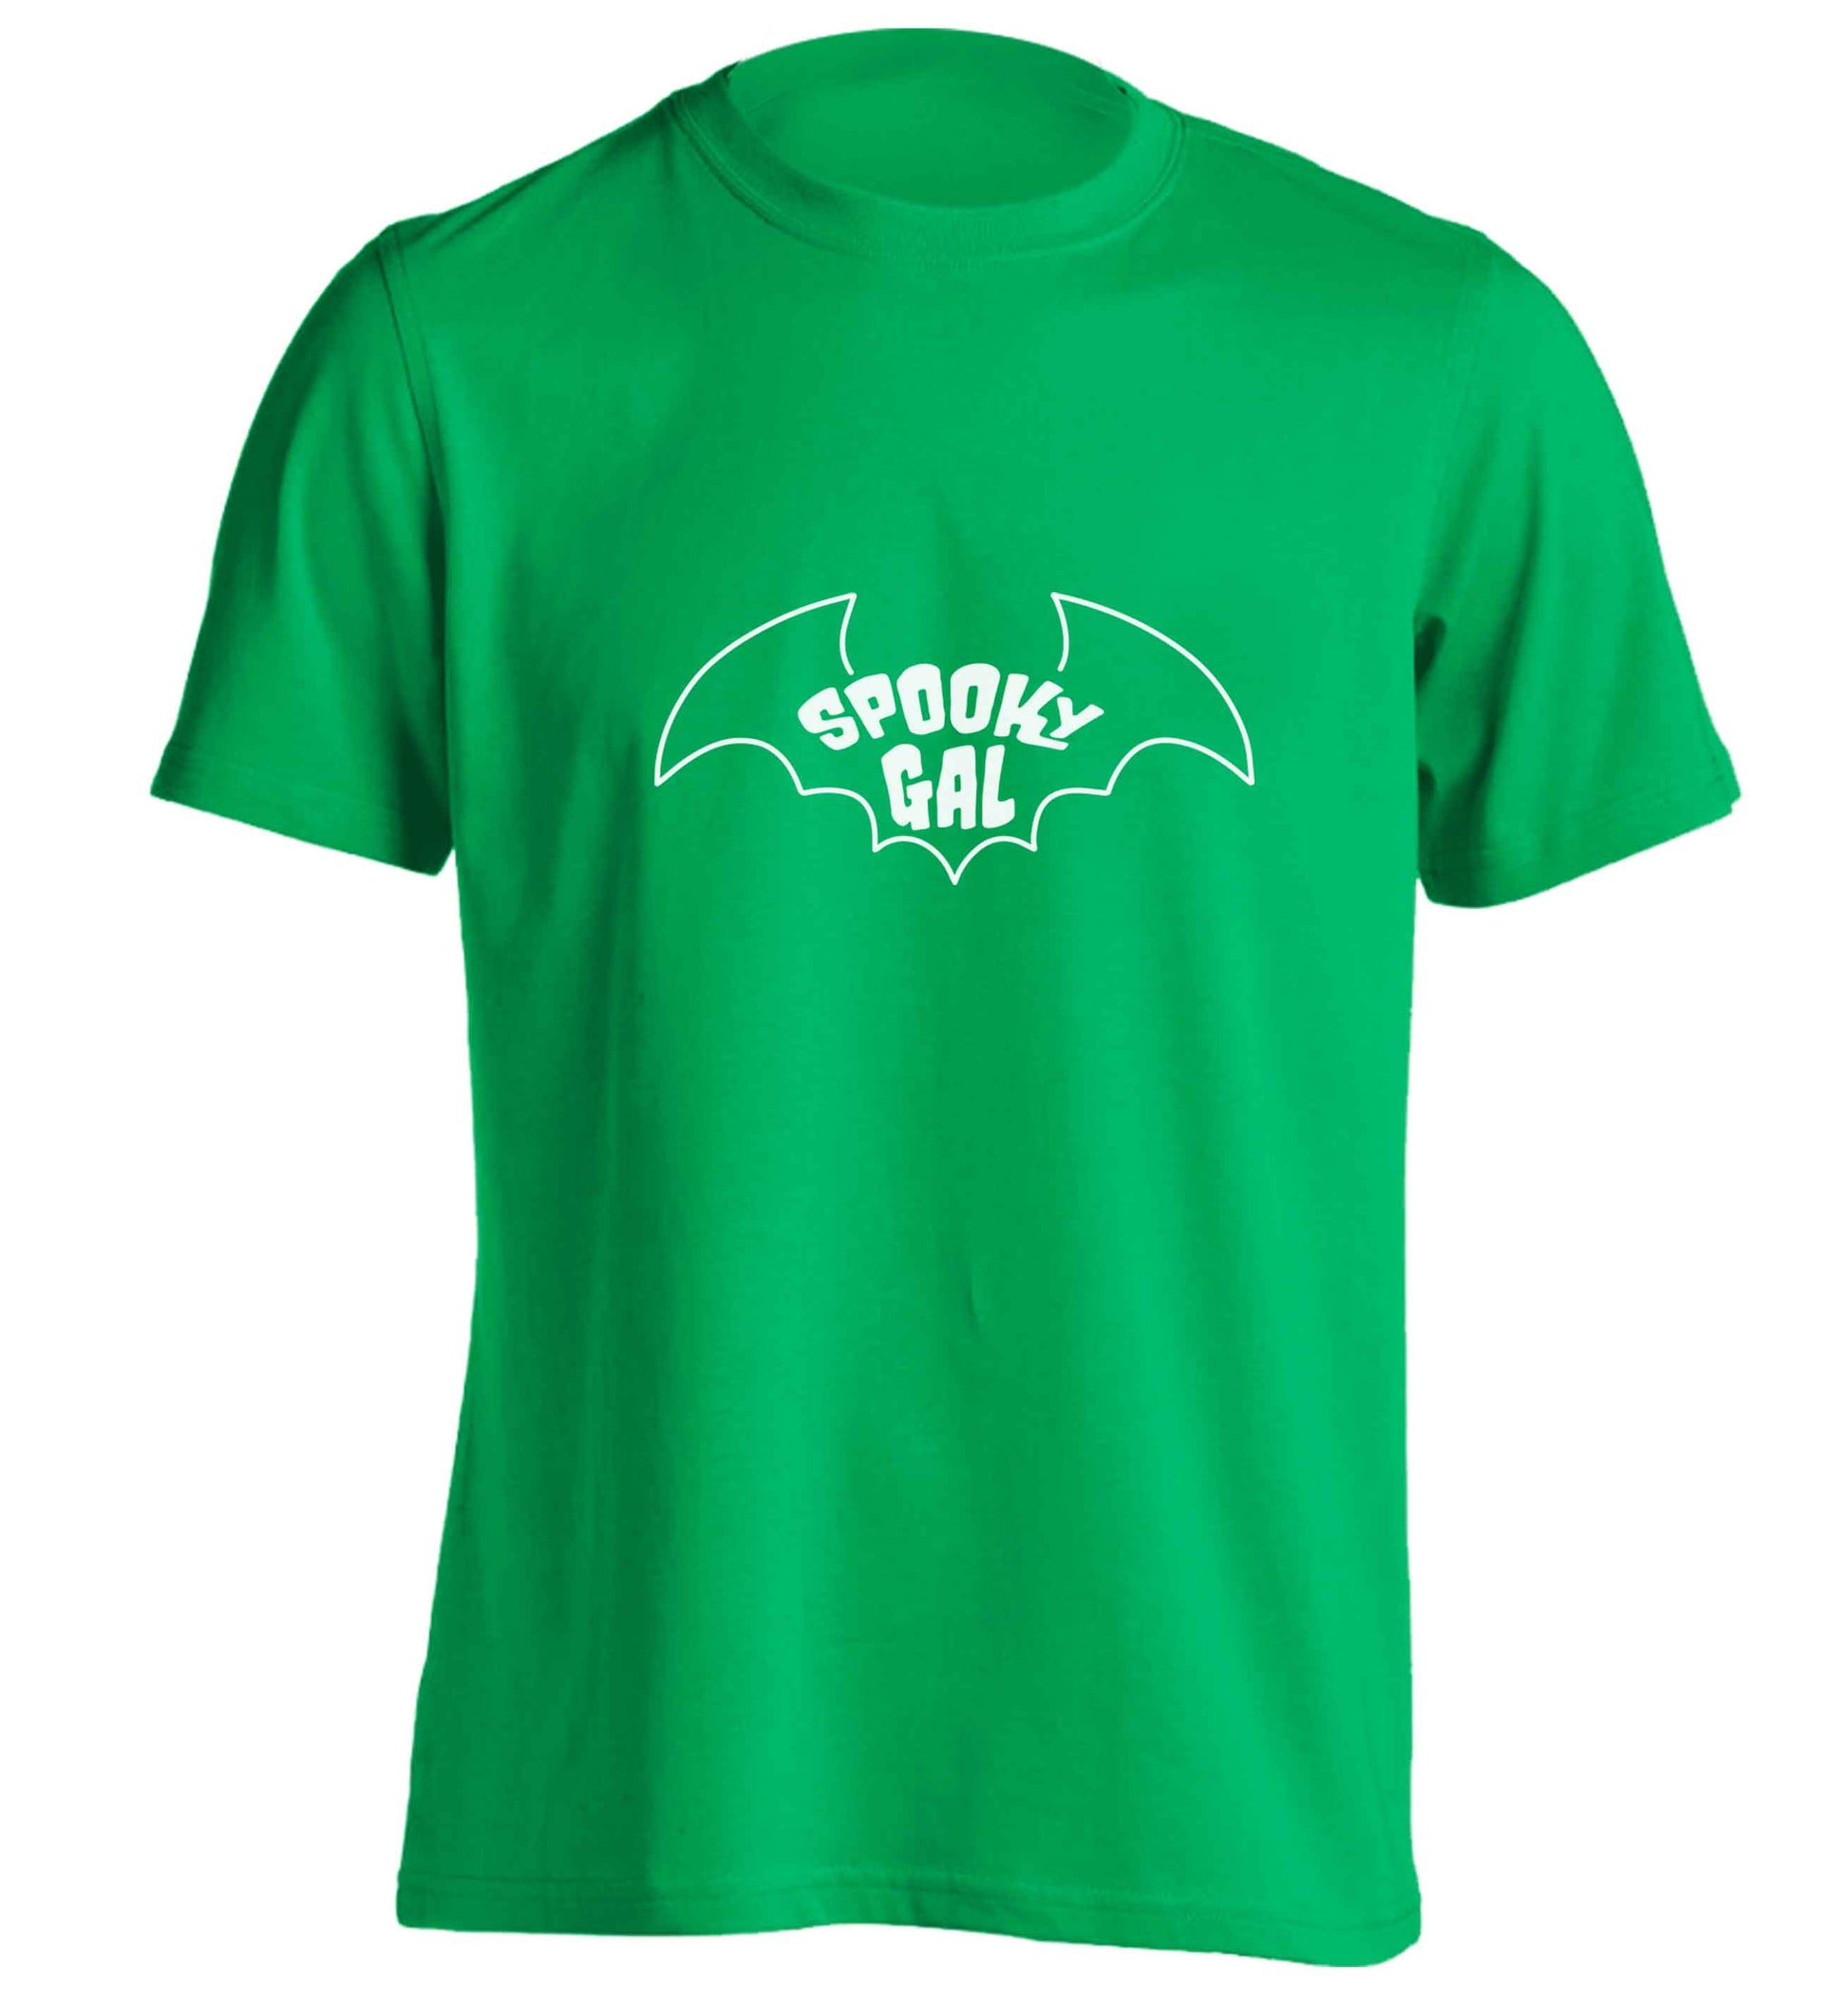 Spooky gal Kit adults unisex green Tshirt 2XL